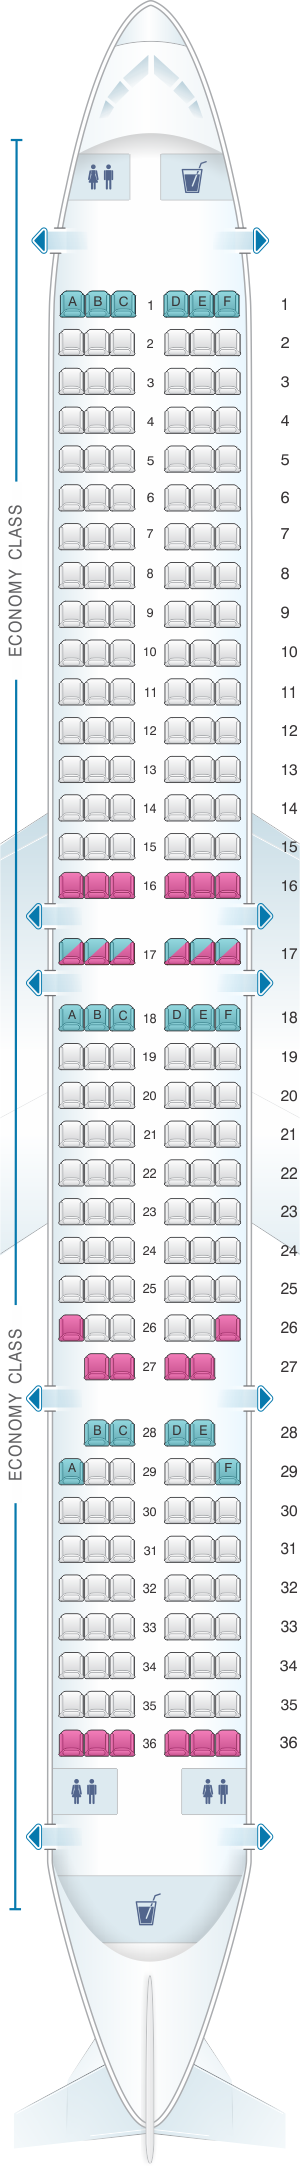 United 737 900 Seating Chart